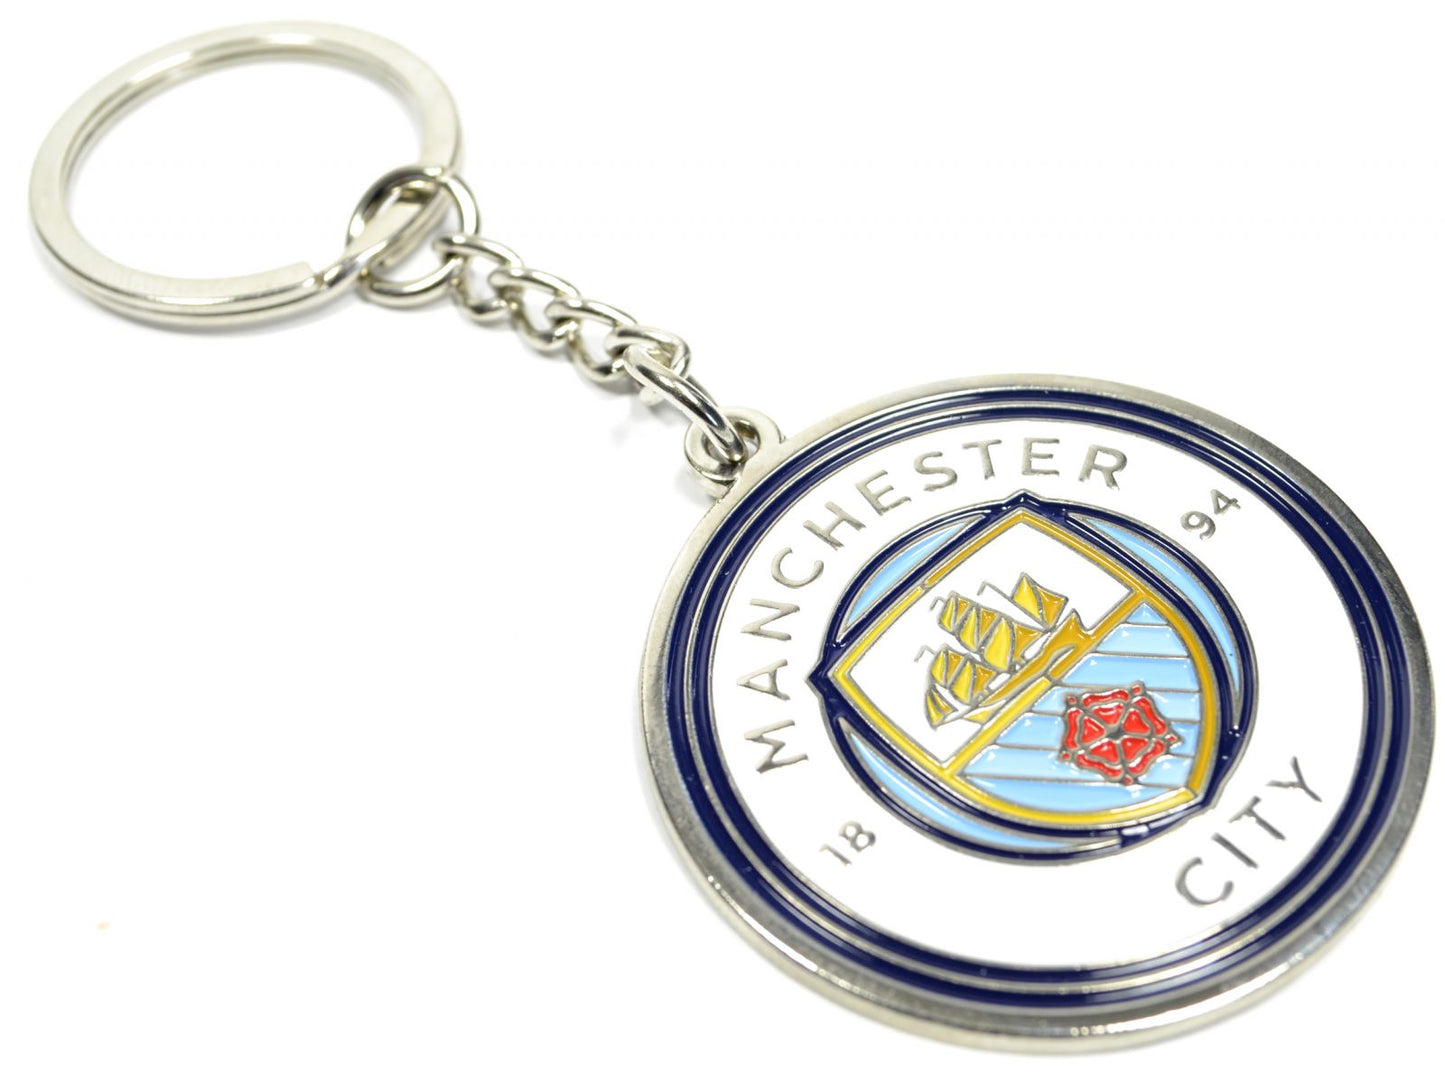 Manchester City Crest Keyring